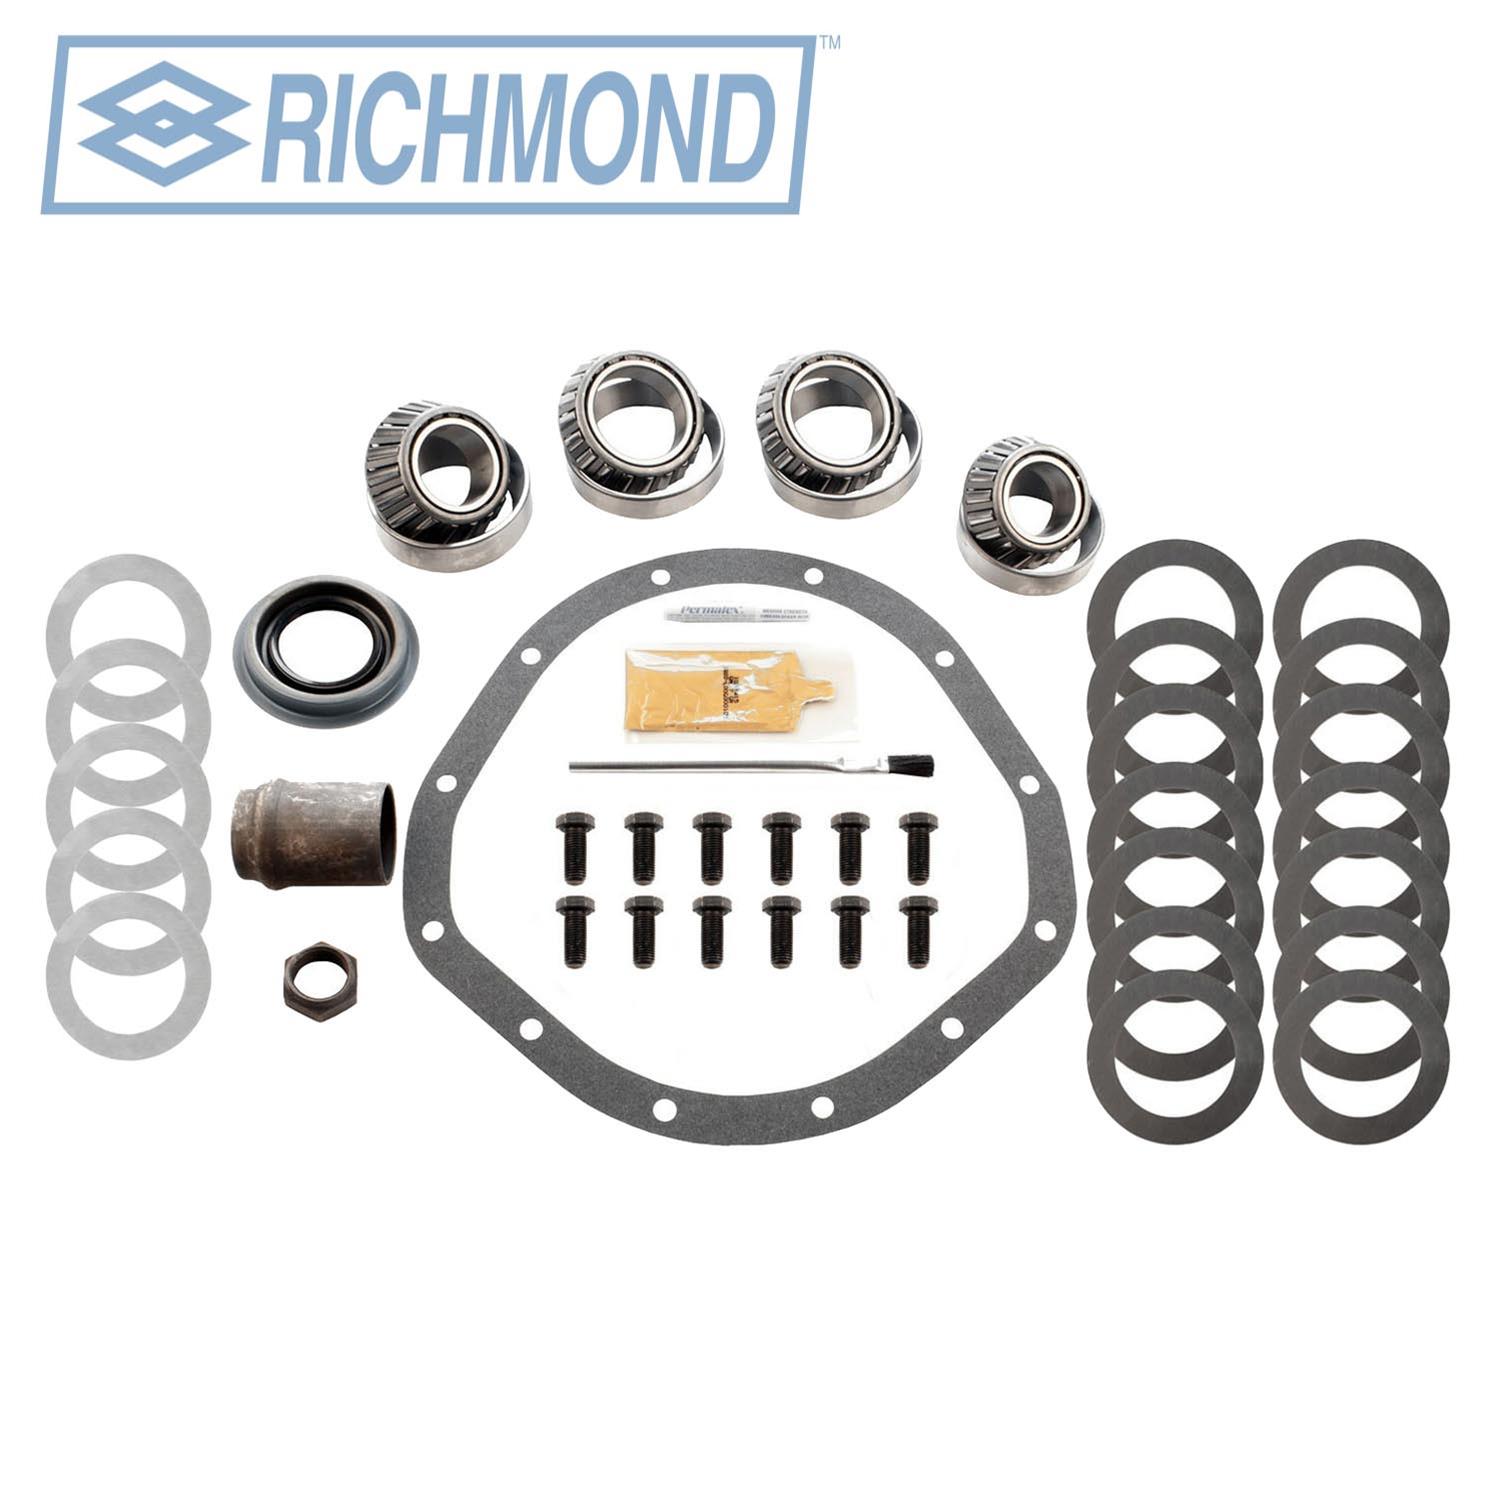 Richmond 83-1088-1 Richmond-Differential Bearing Kit-Timken Differential Bearing Kit-Timken 